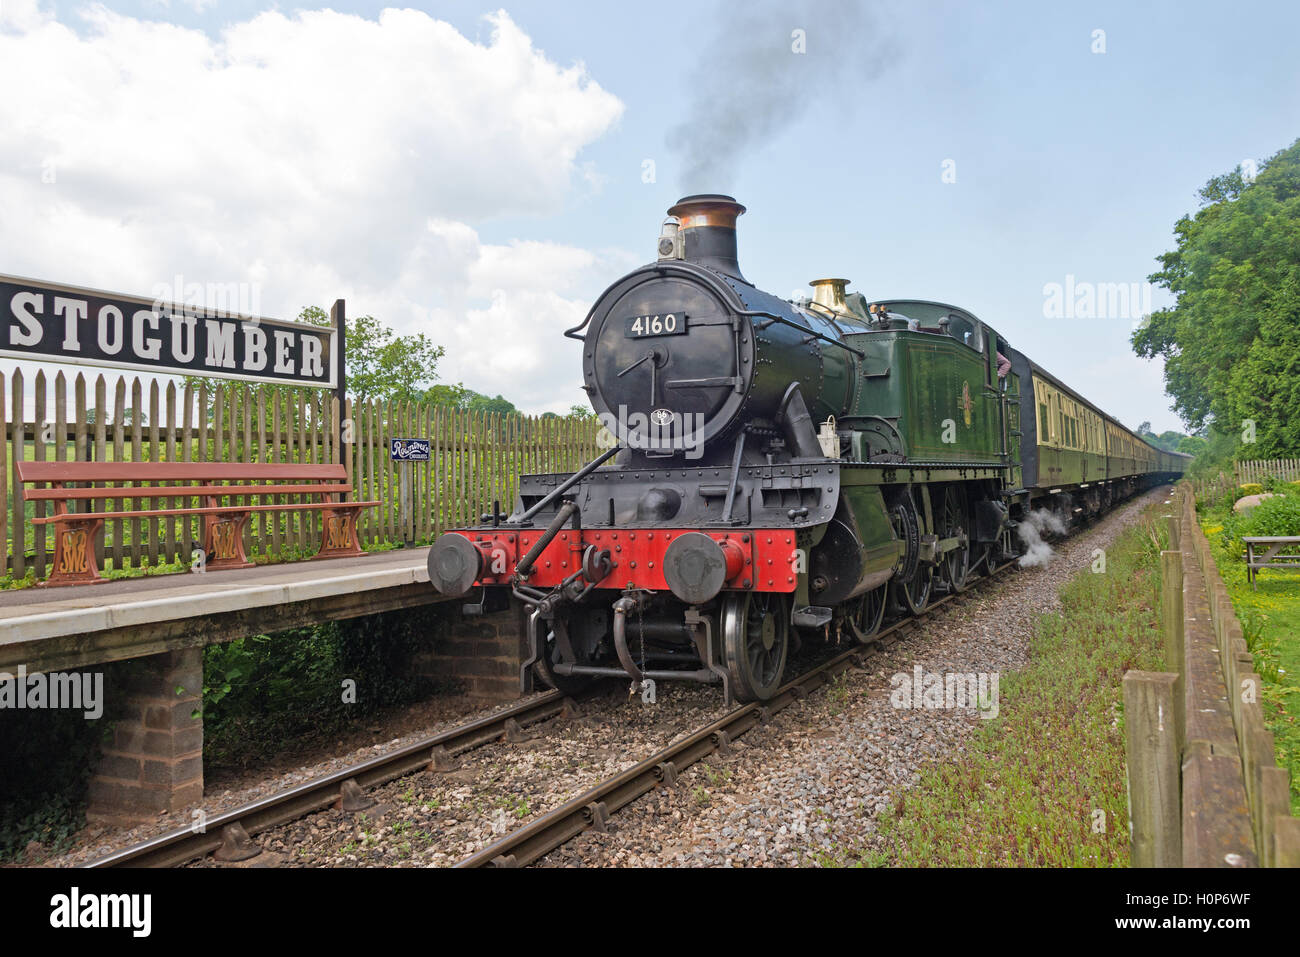 Locomotiva a vapore 4160 Una classe 5101 grande prairie motore arrivando alla stazione Stogumber sulla West Somerset Railway in Somerset Foto Stock